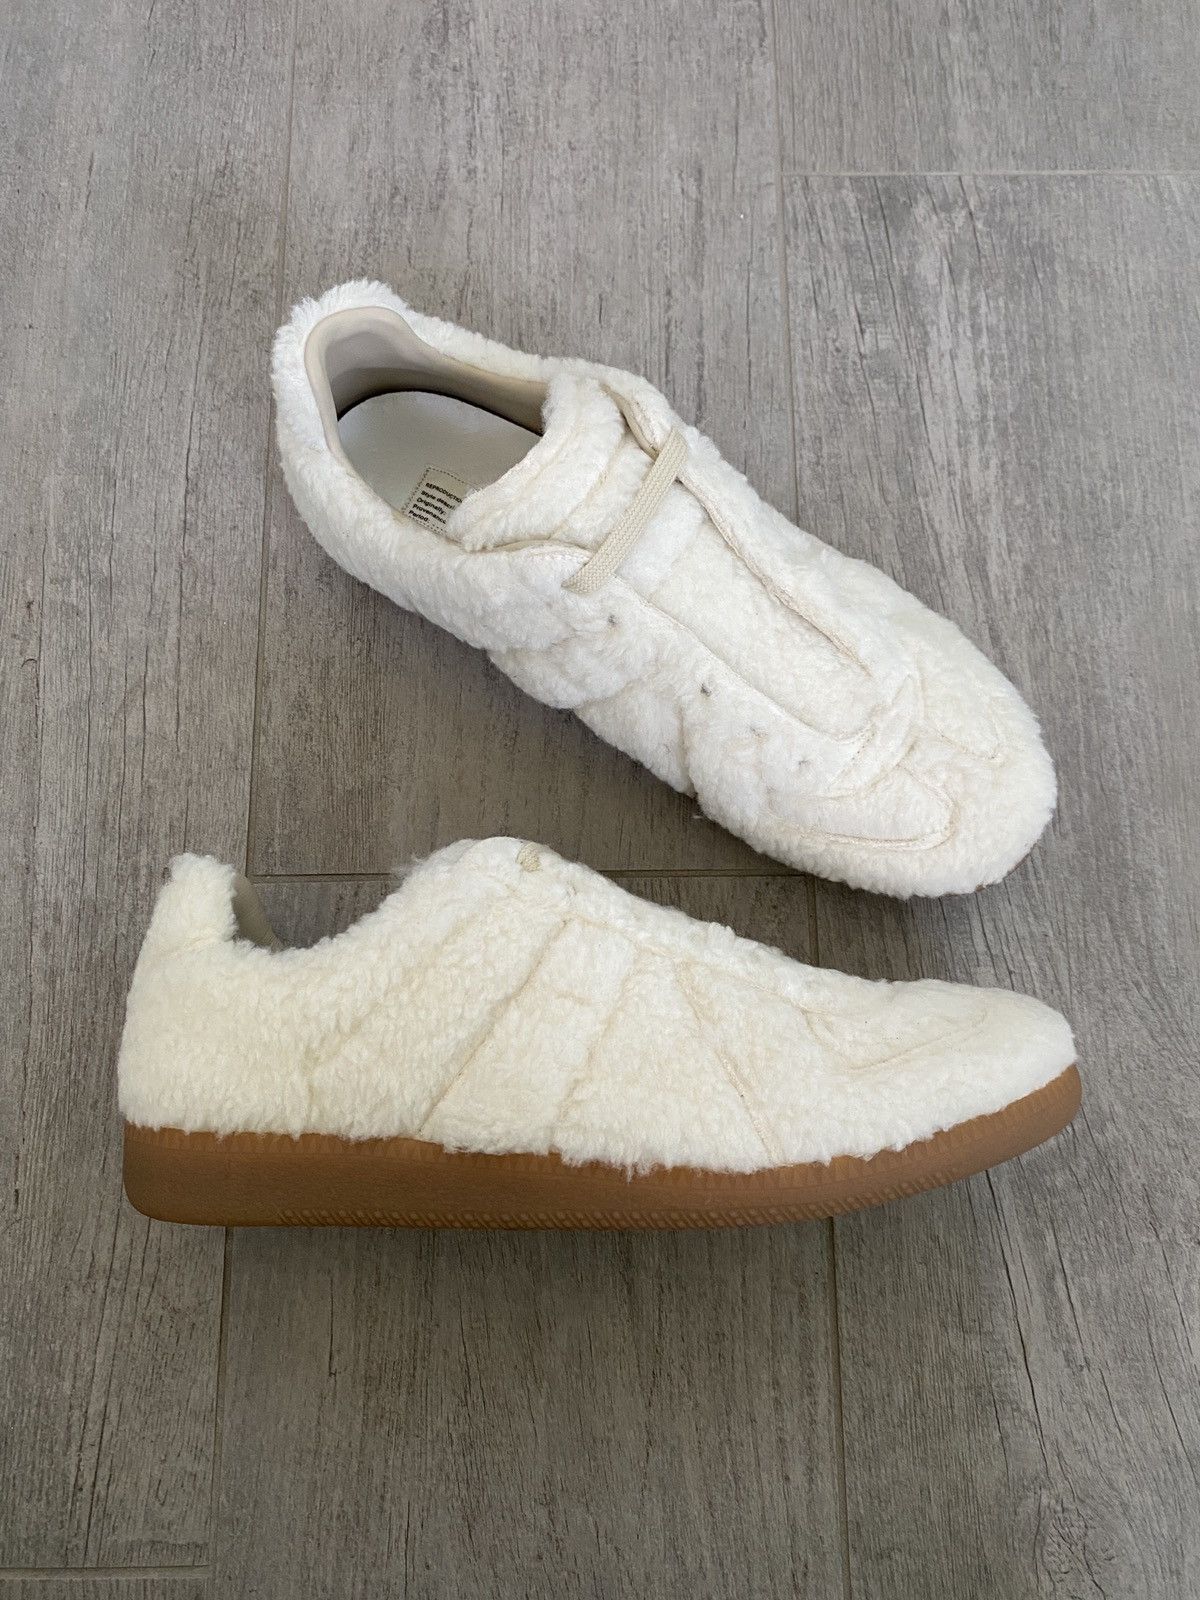 Maison Margiela Maison Margiela Off-White Fleece Replica GAT Sneakers -  41.5 | Grailed